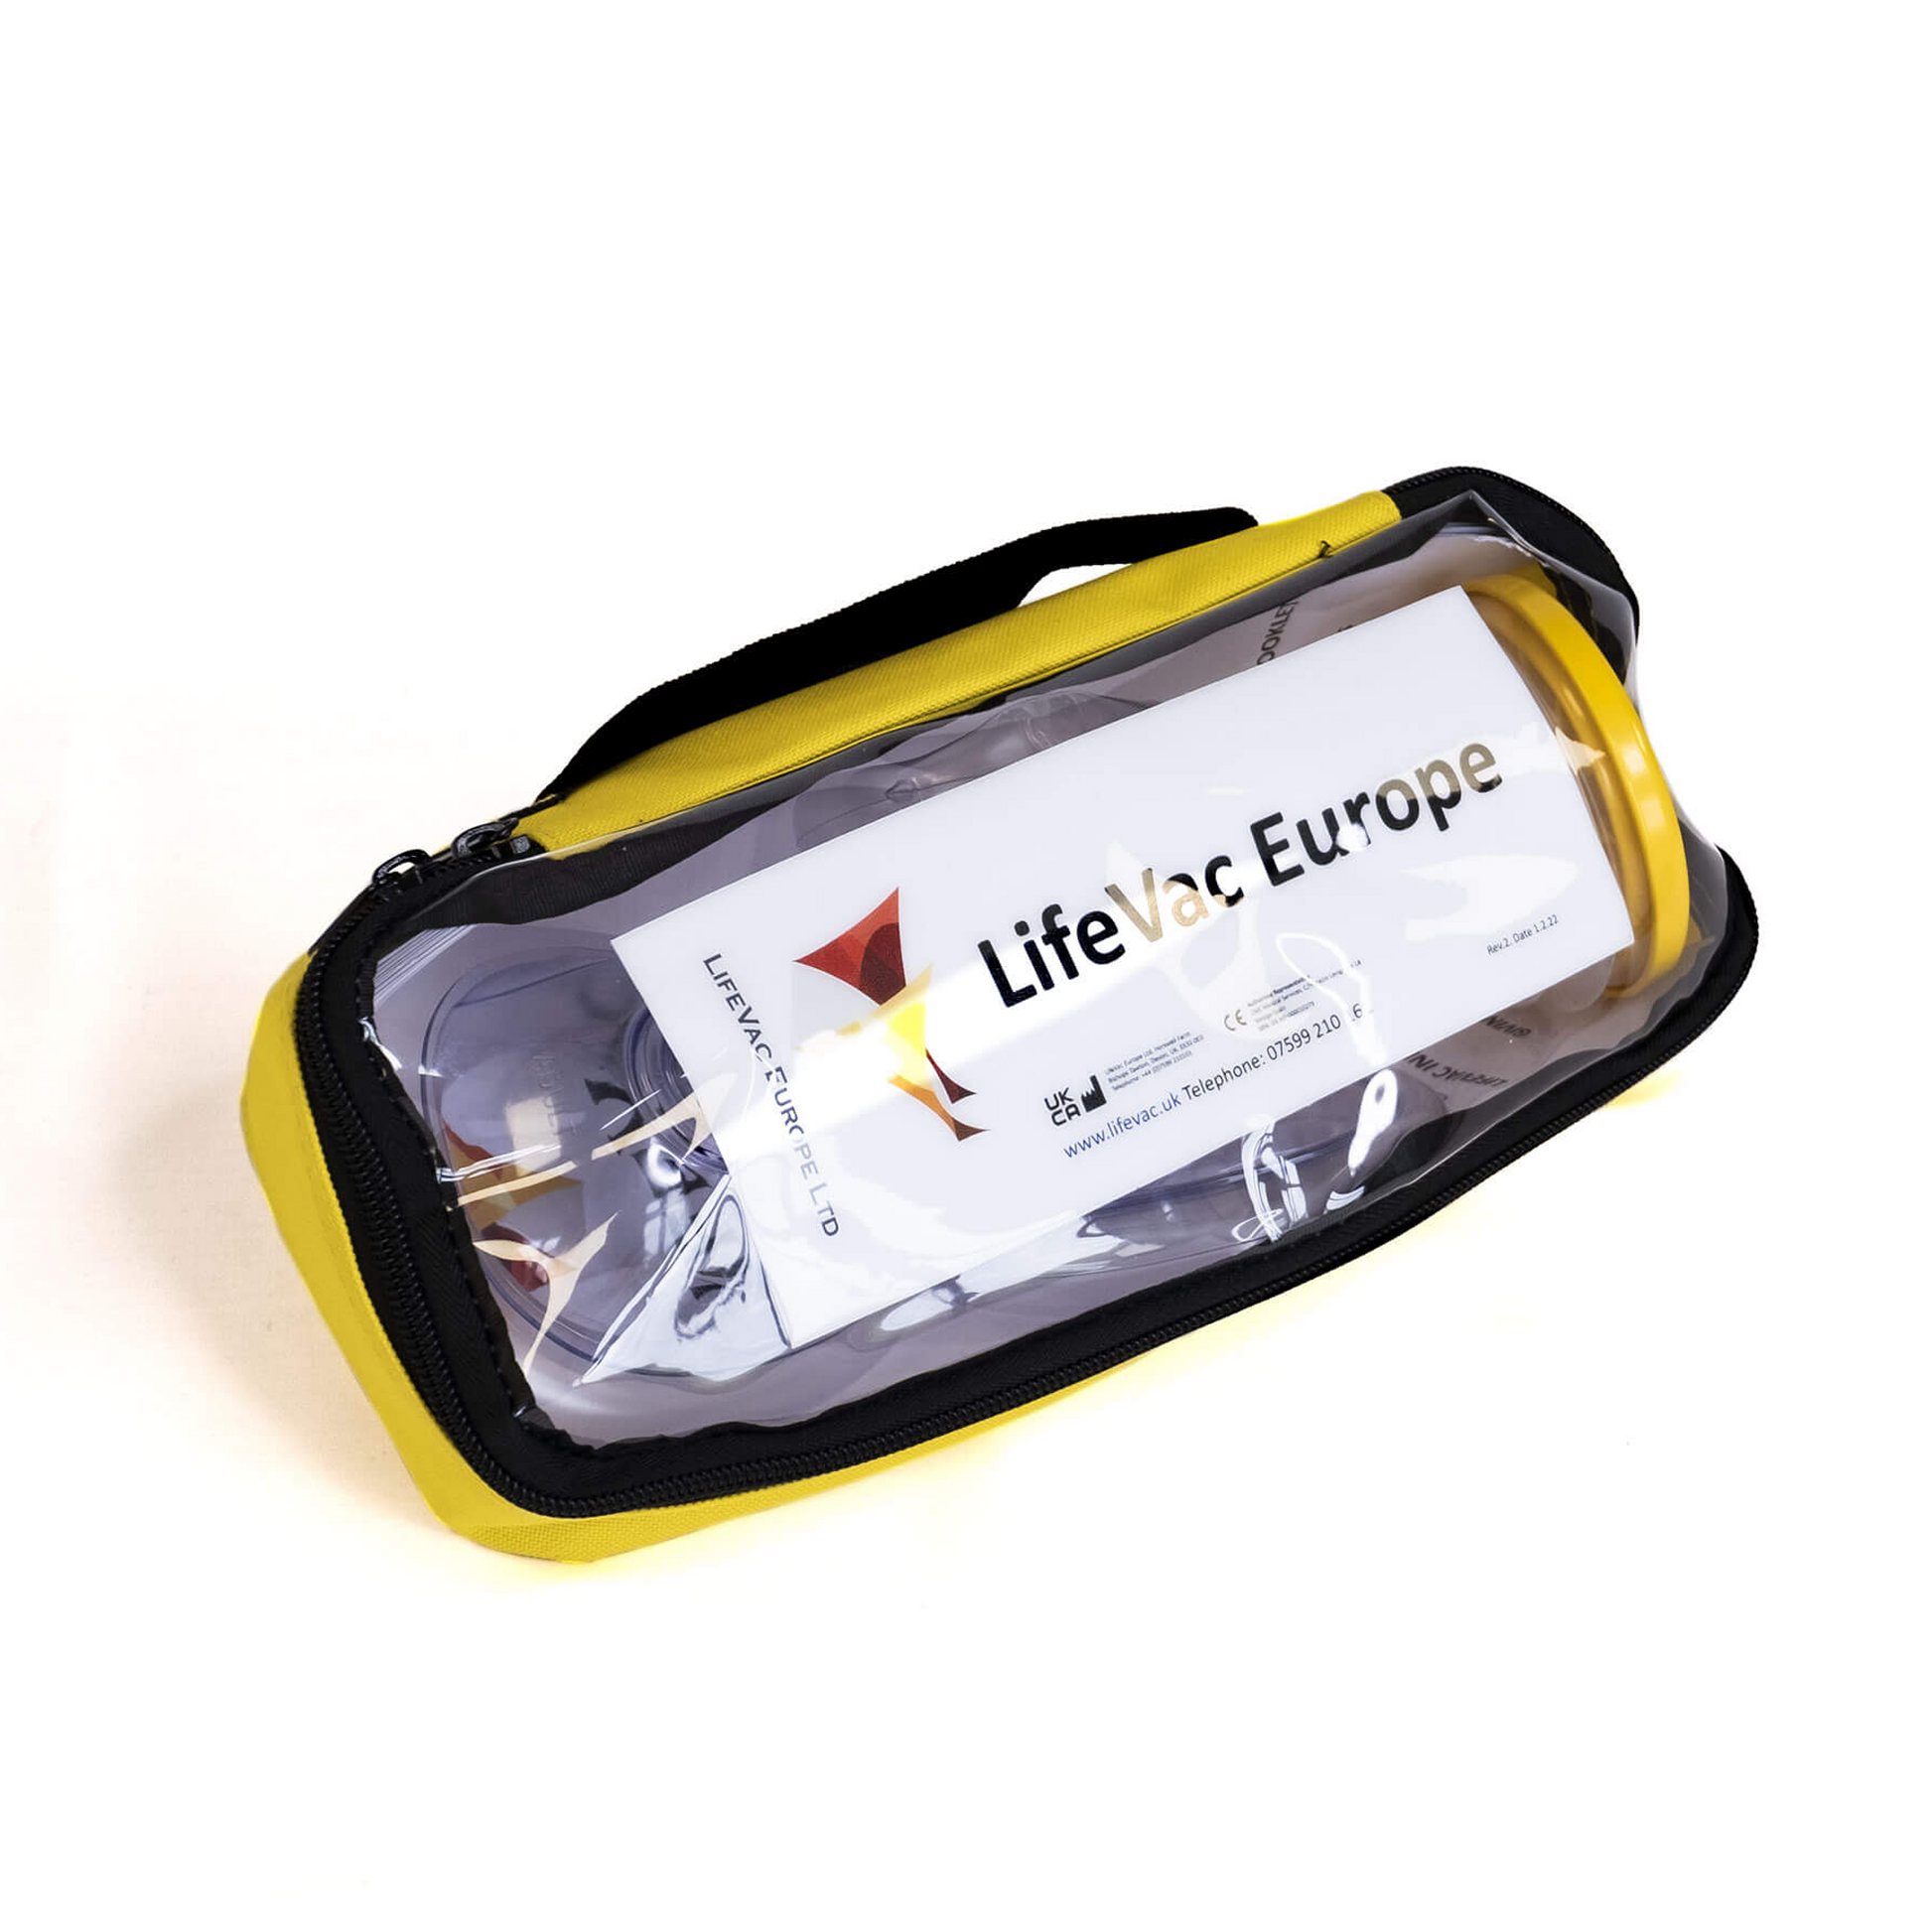 LifeVac Anti-Choking Home Kit - LifeVac Europe Ltd